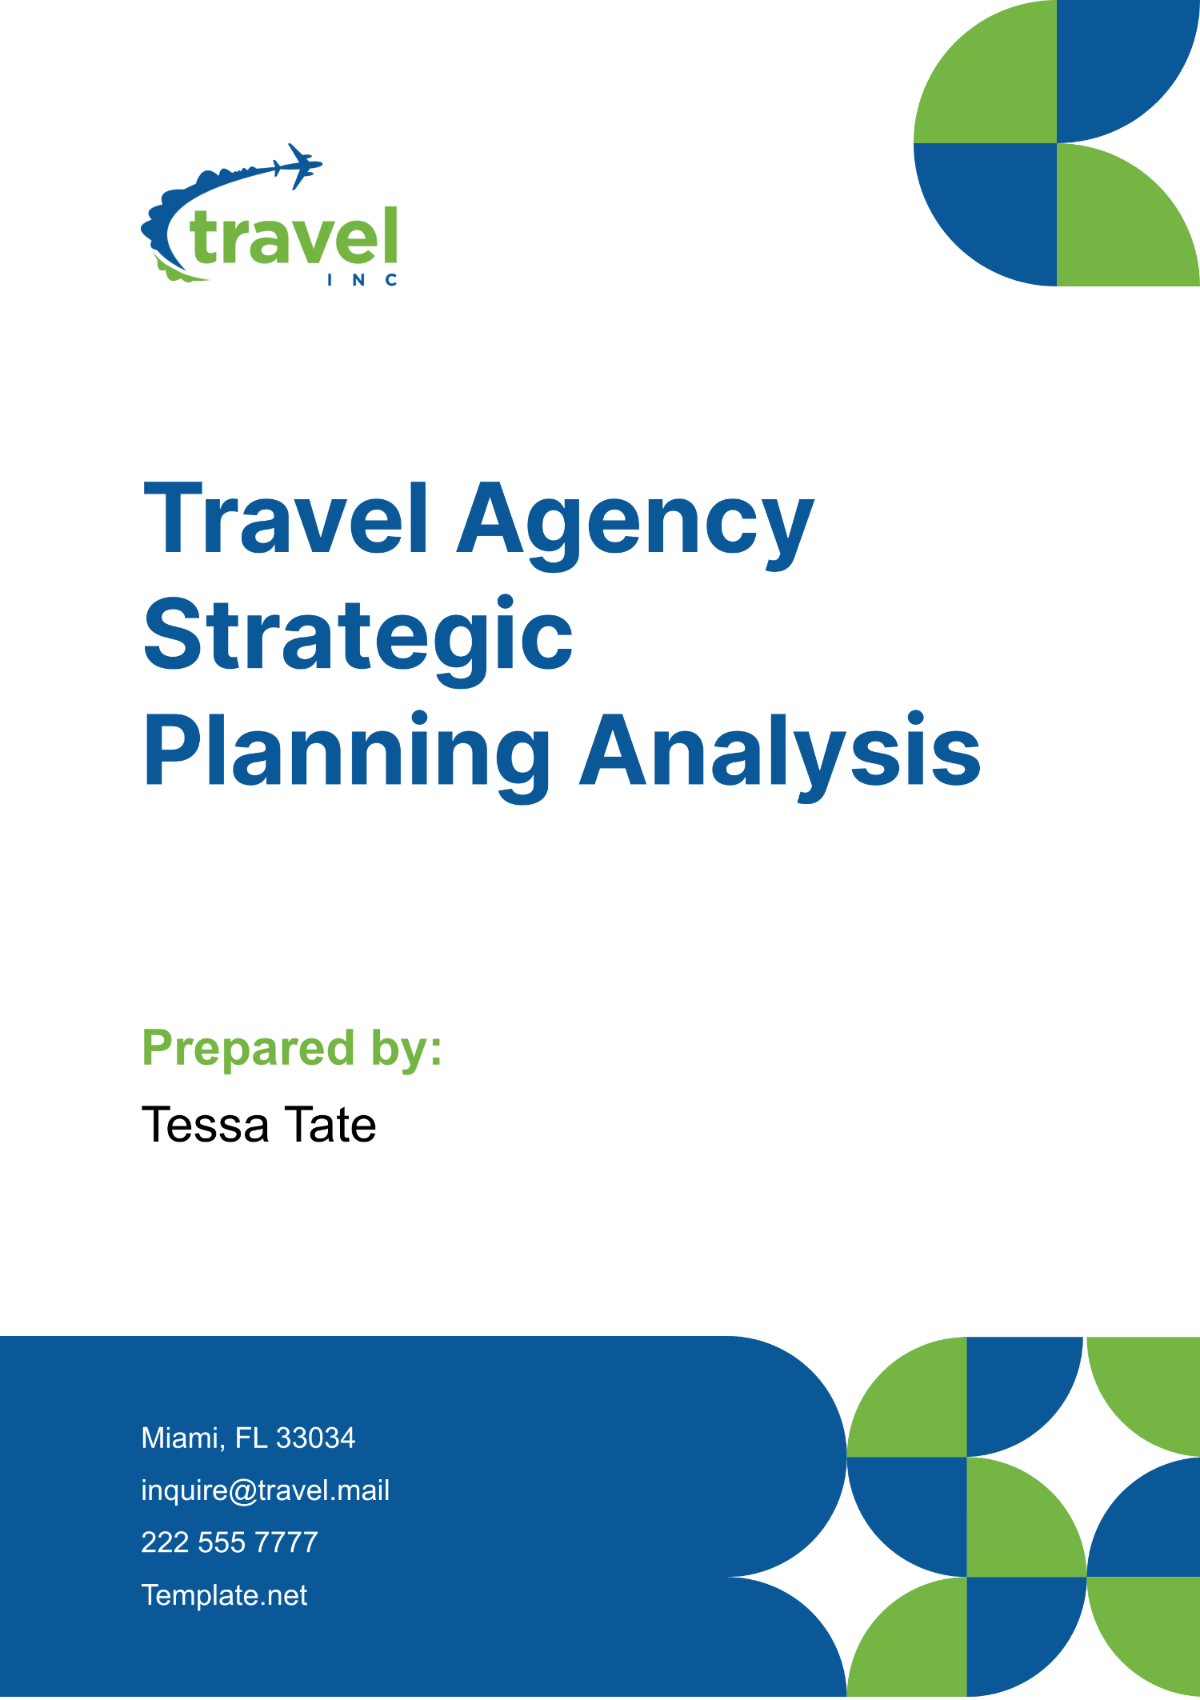 Travel Agency Strategic Planning Analysis Template